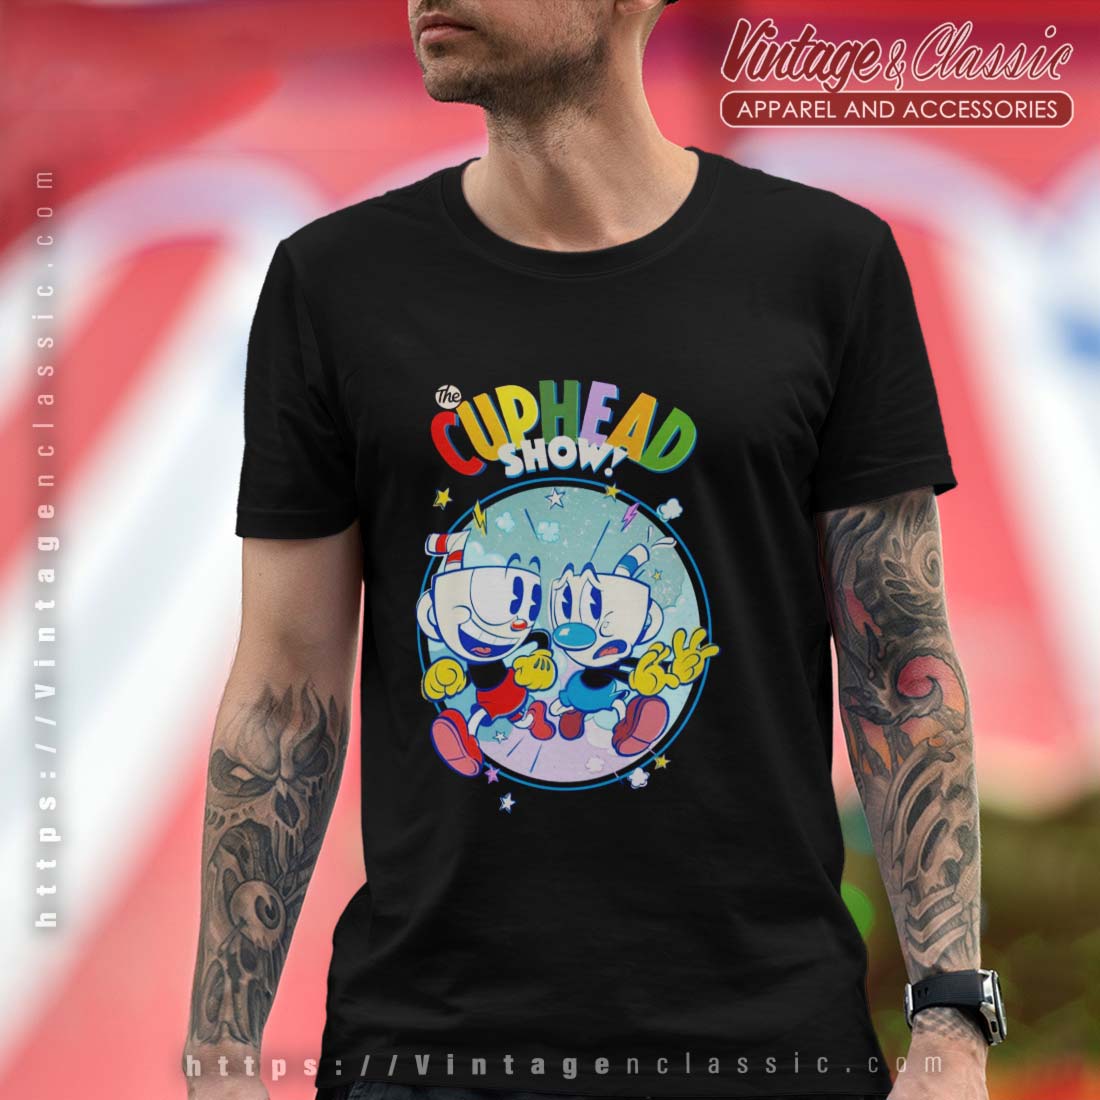 tidsskrift Serrated mikroskopisk The Cuphead Show Shirt - High-Quality Printed Brand